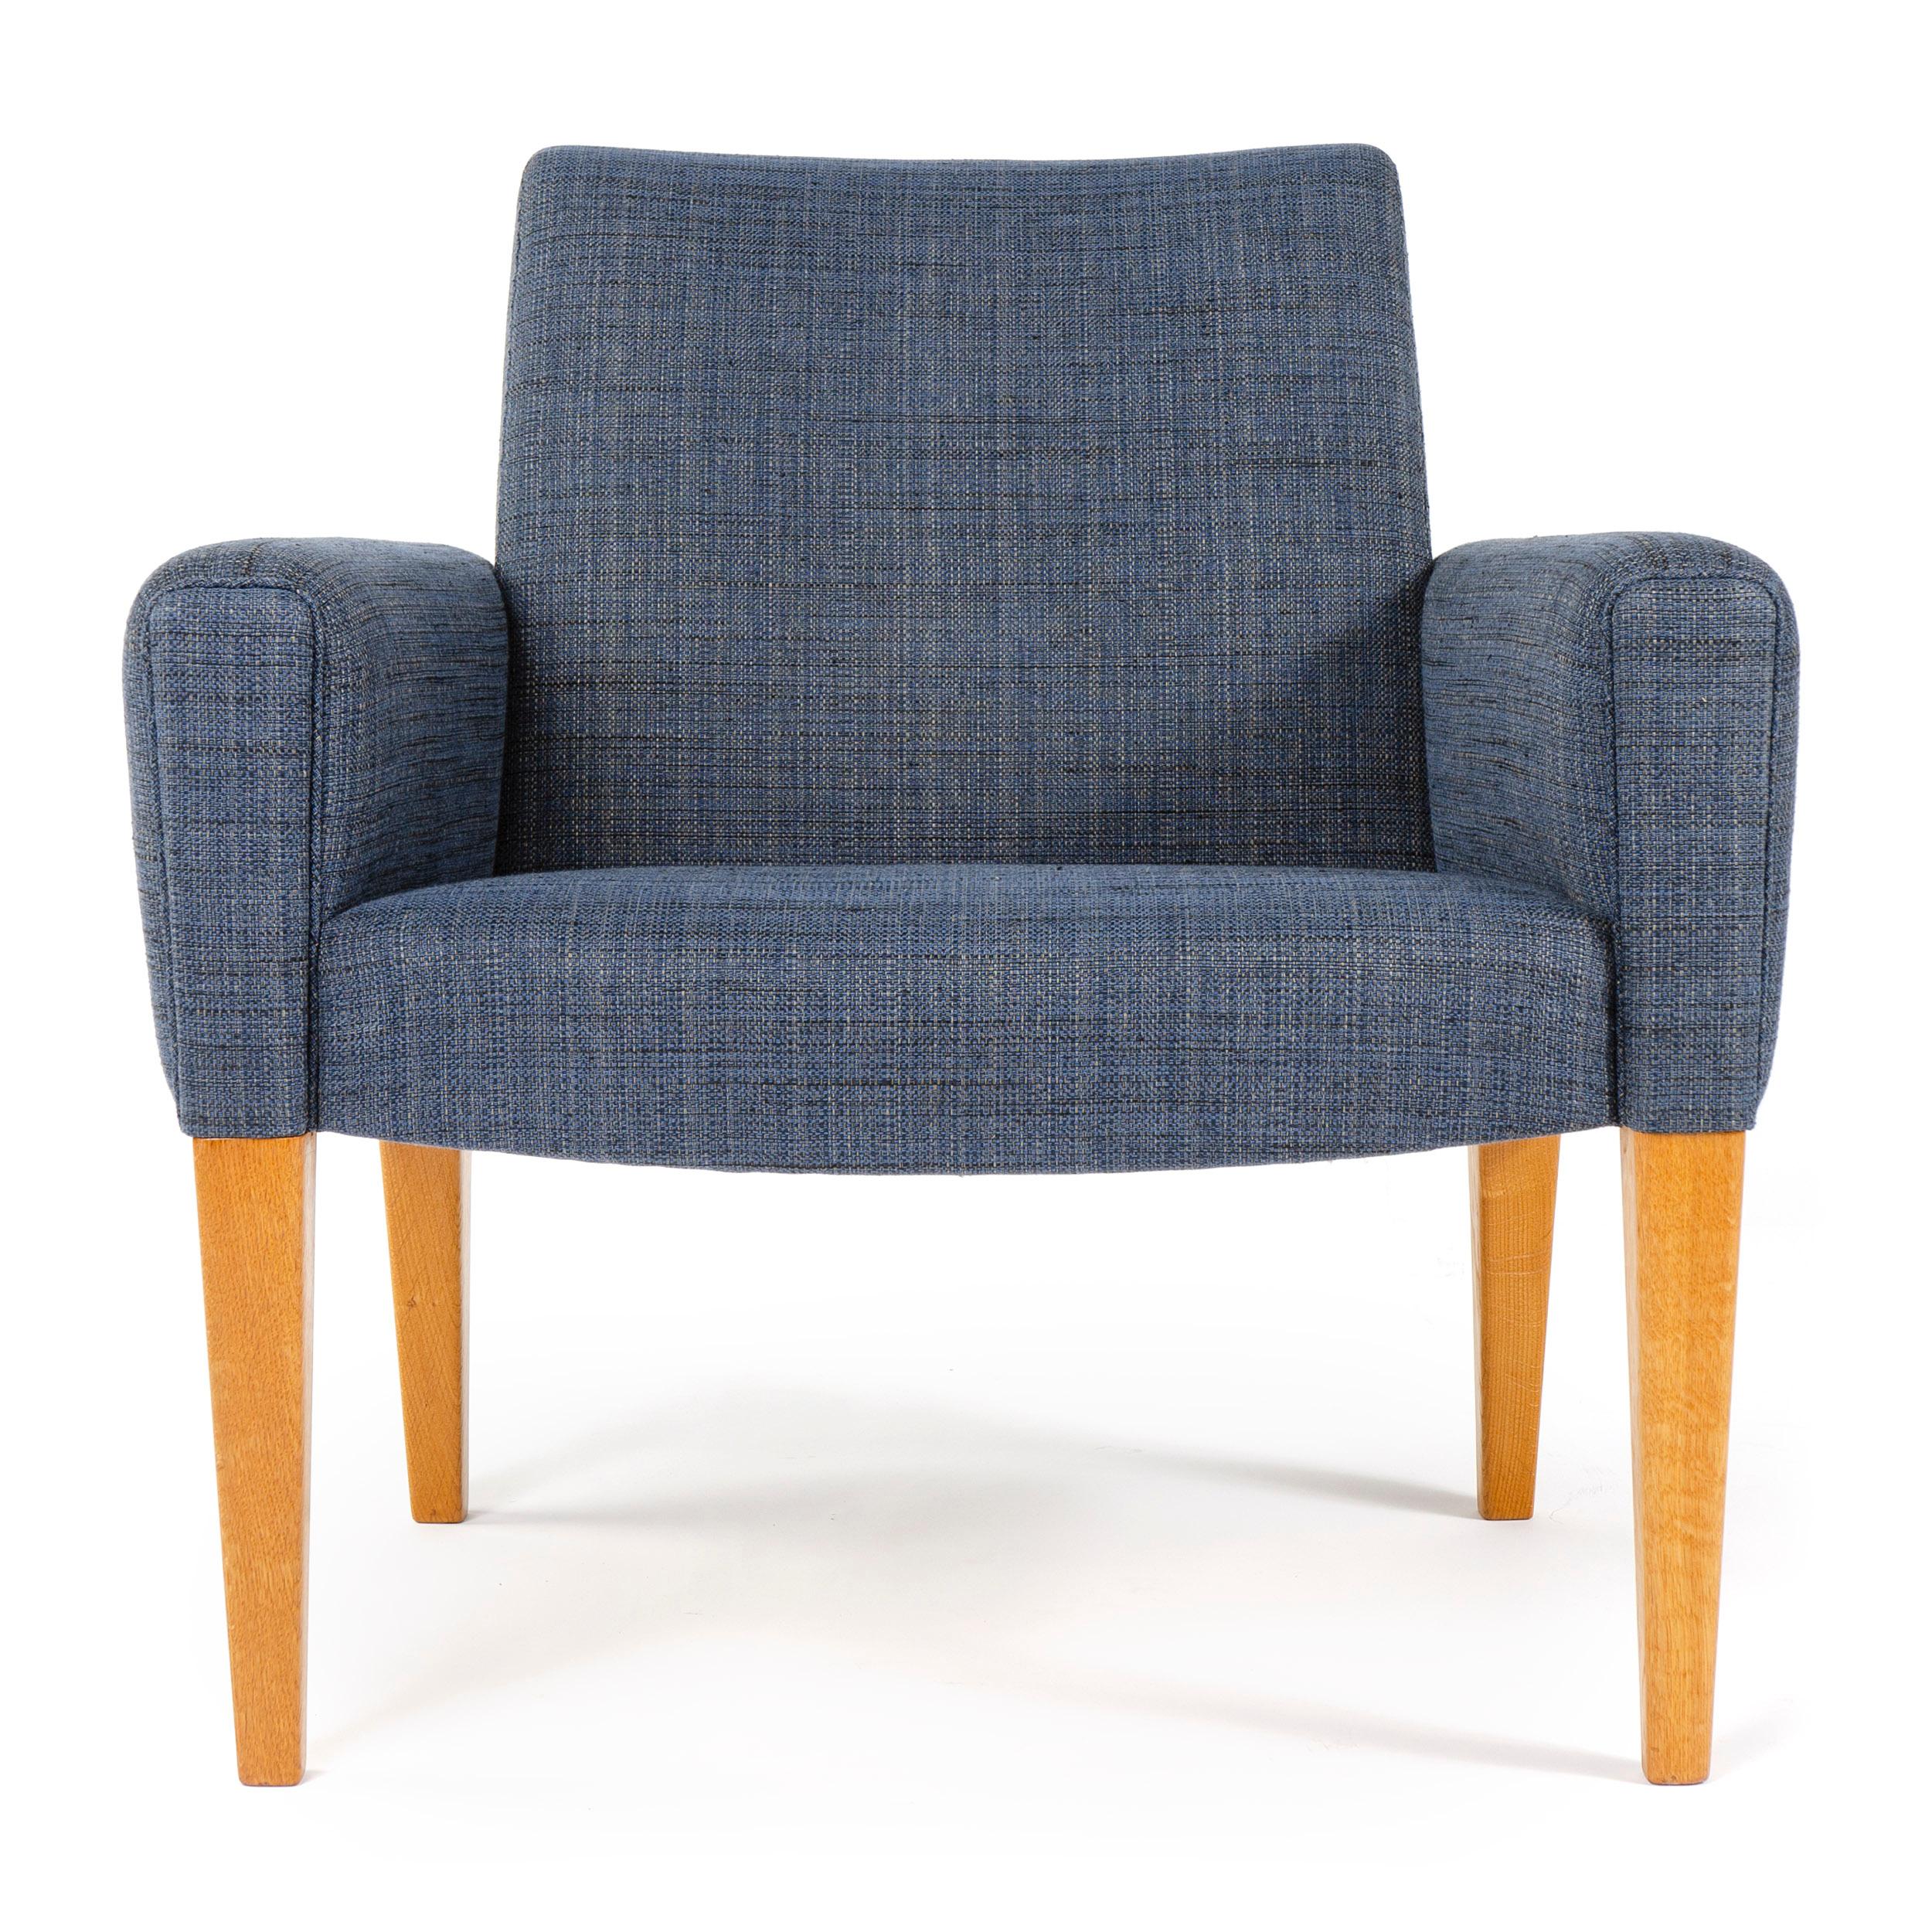 Dänisches Sesselpaar aus den 1950er Jahren Hans Wegner für A.P. Stolen (Skandinavische Moderne) im Angebot